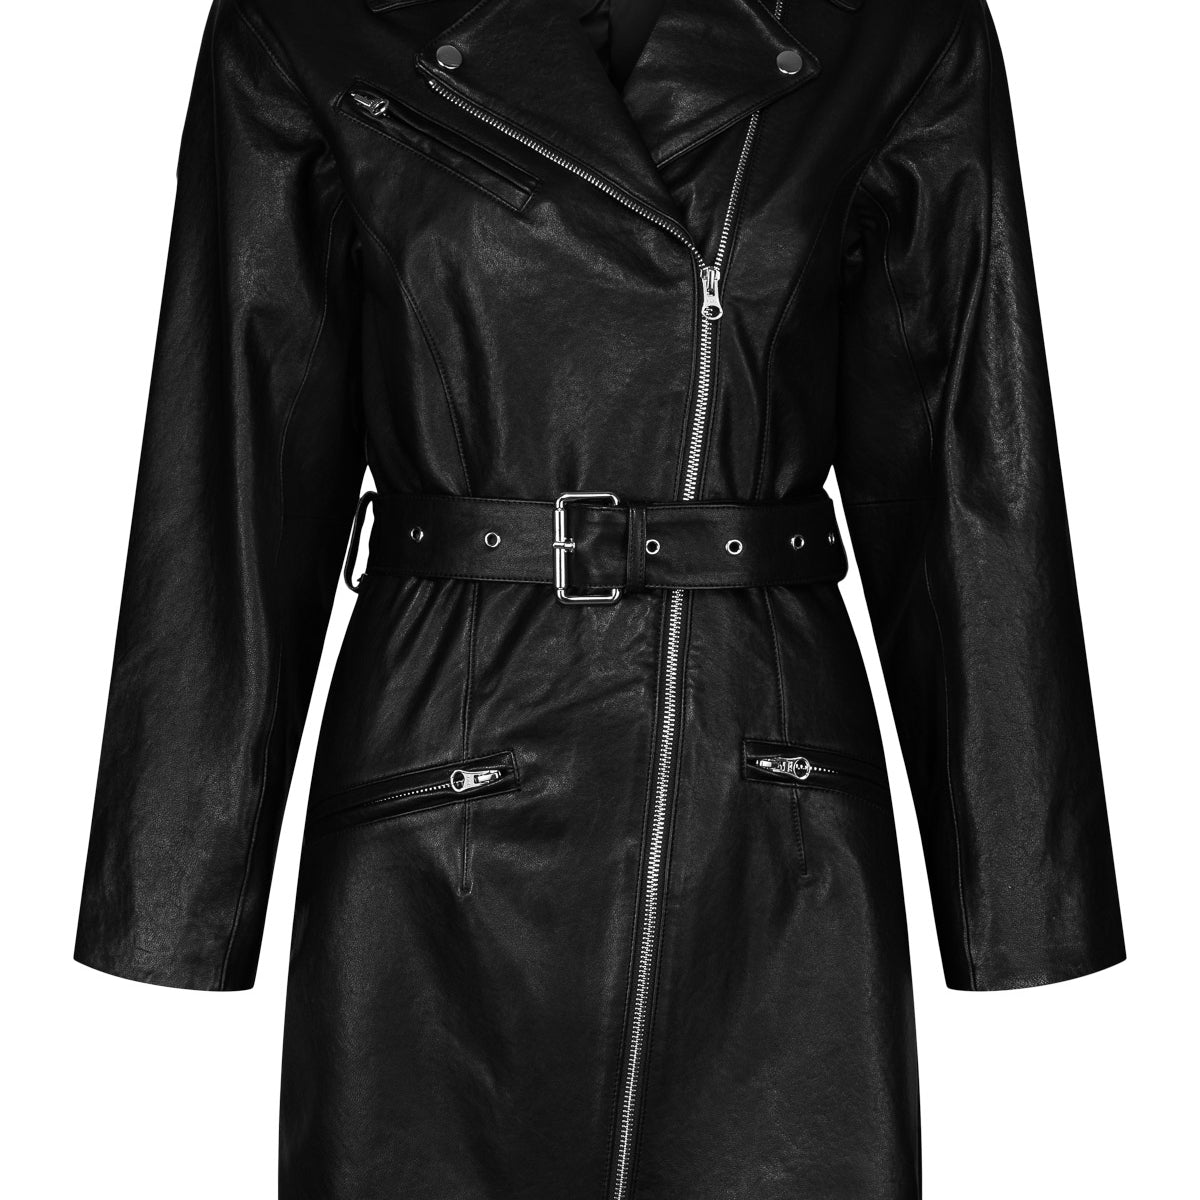 Black Slip Dress & Faux Leather Trench Coat - OpalbyOpal